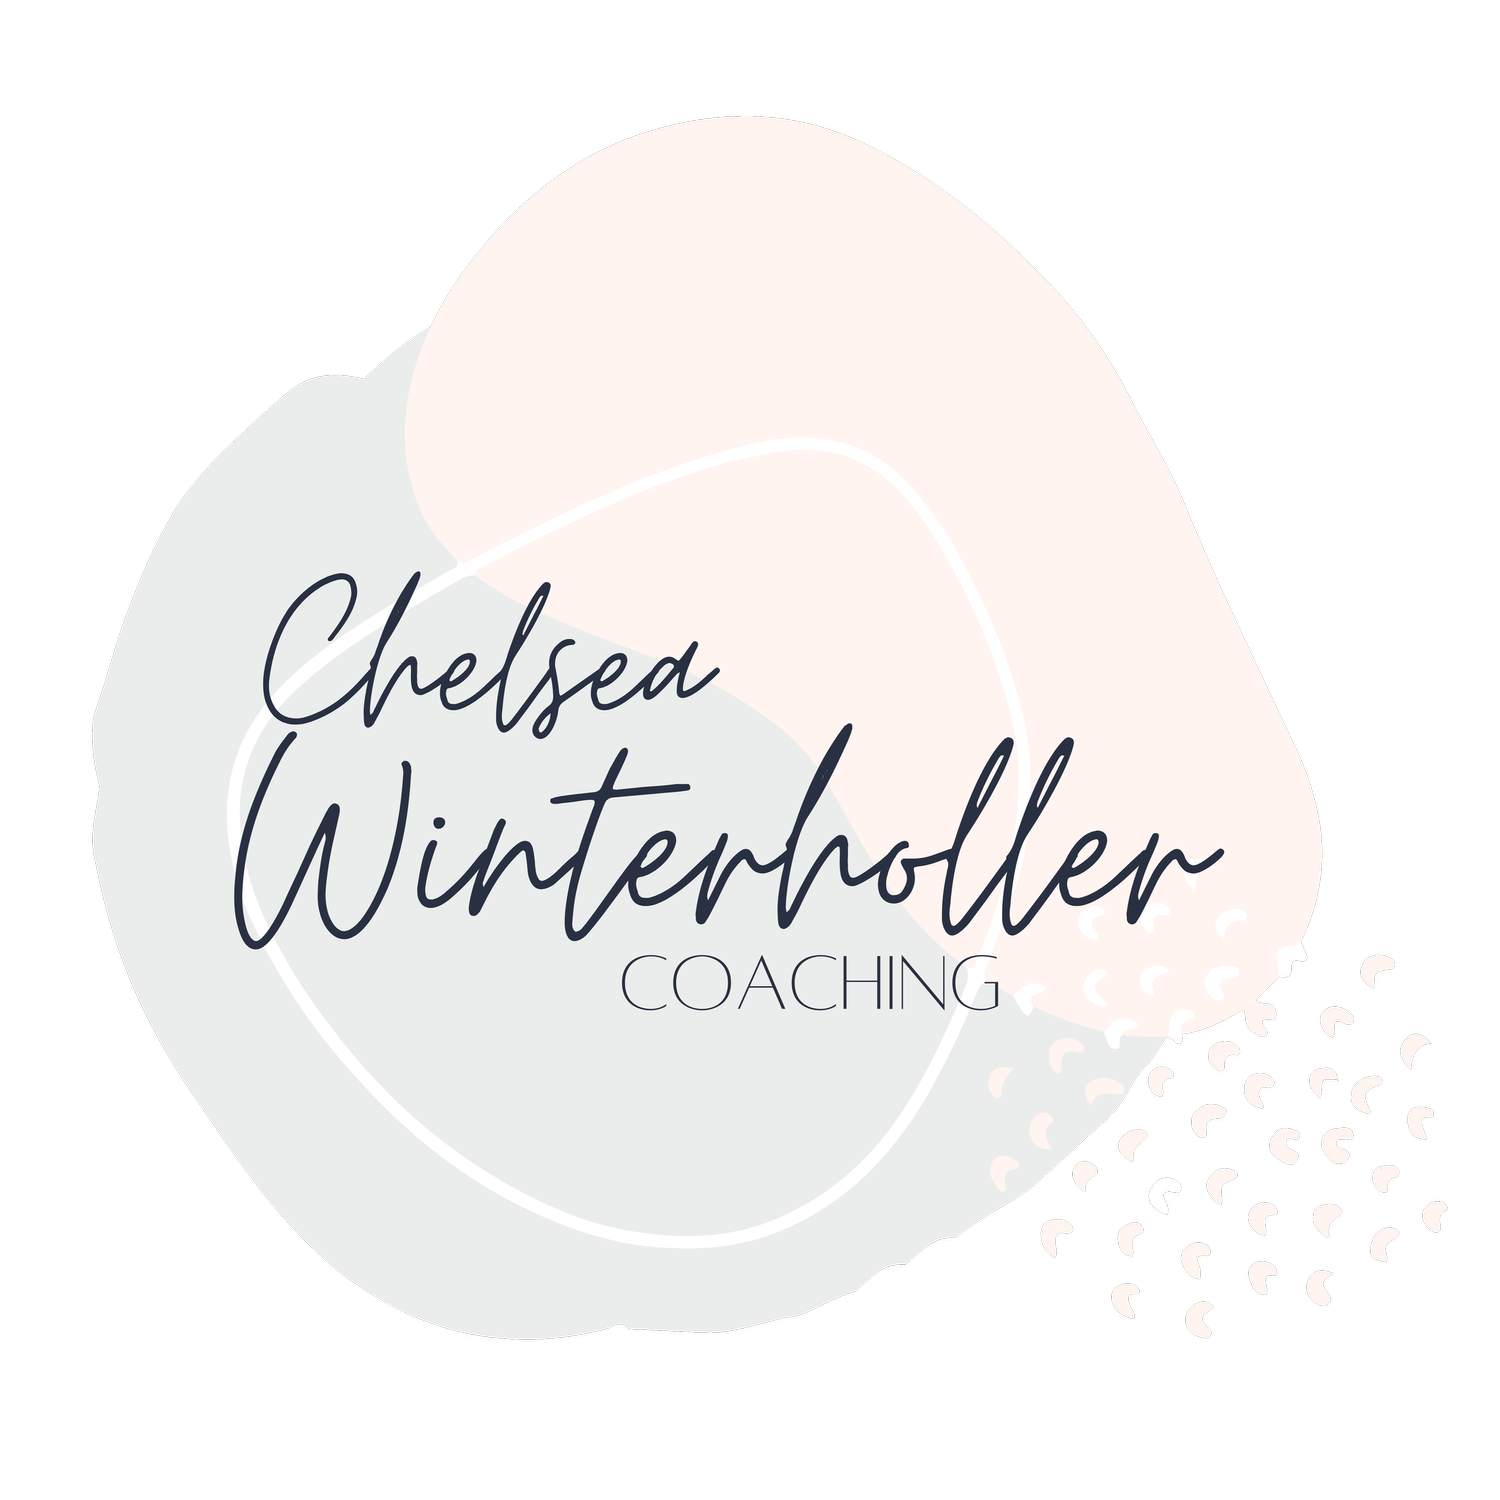 Chelsea Winterholler Coaching